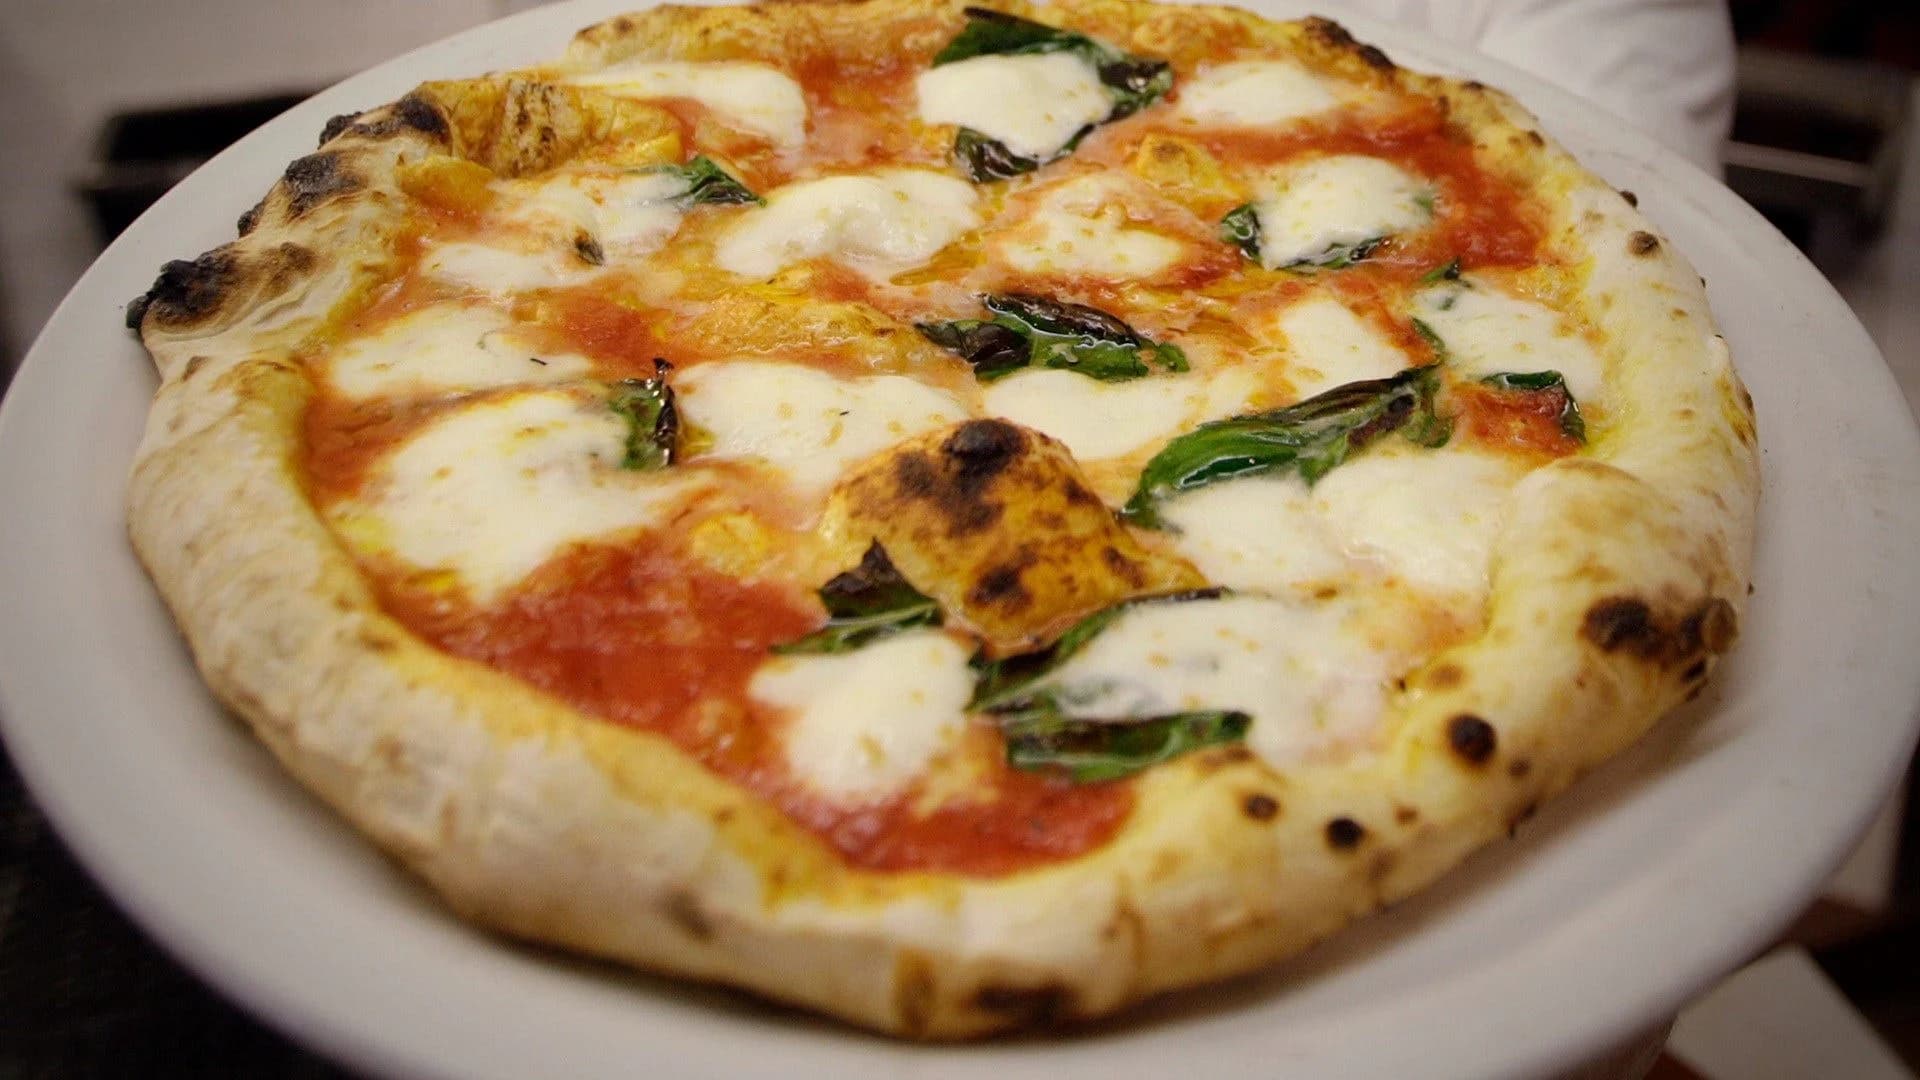 Iconic pizza spot Una Pizza Napoletana to open new location in New Jersey